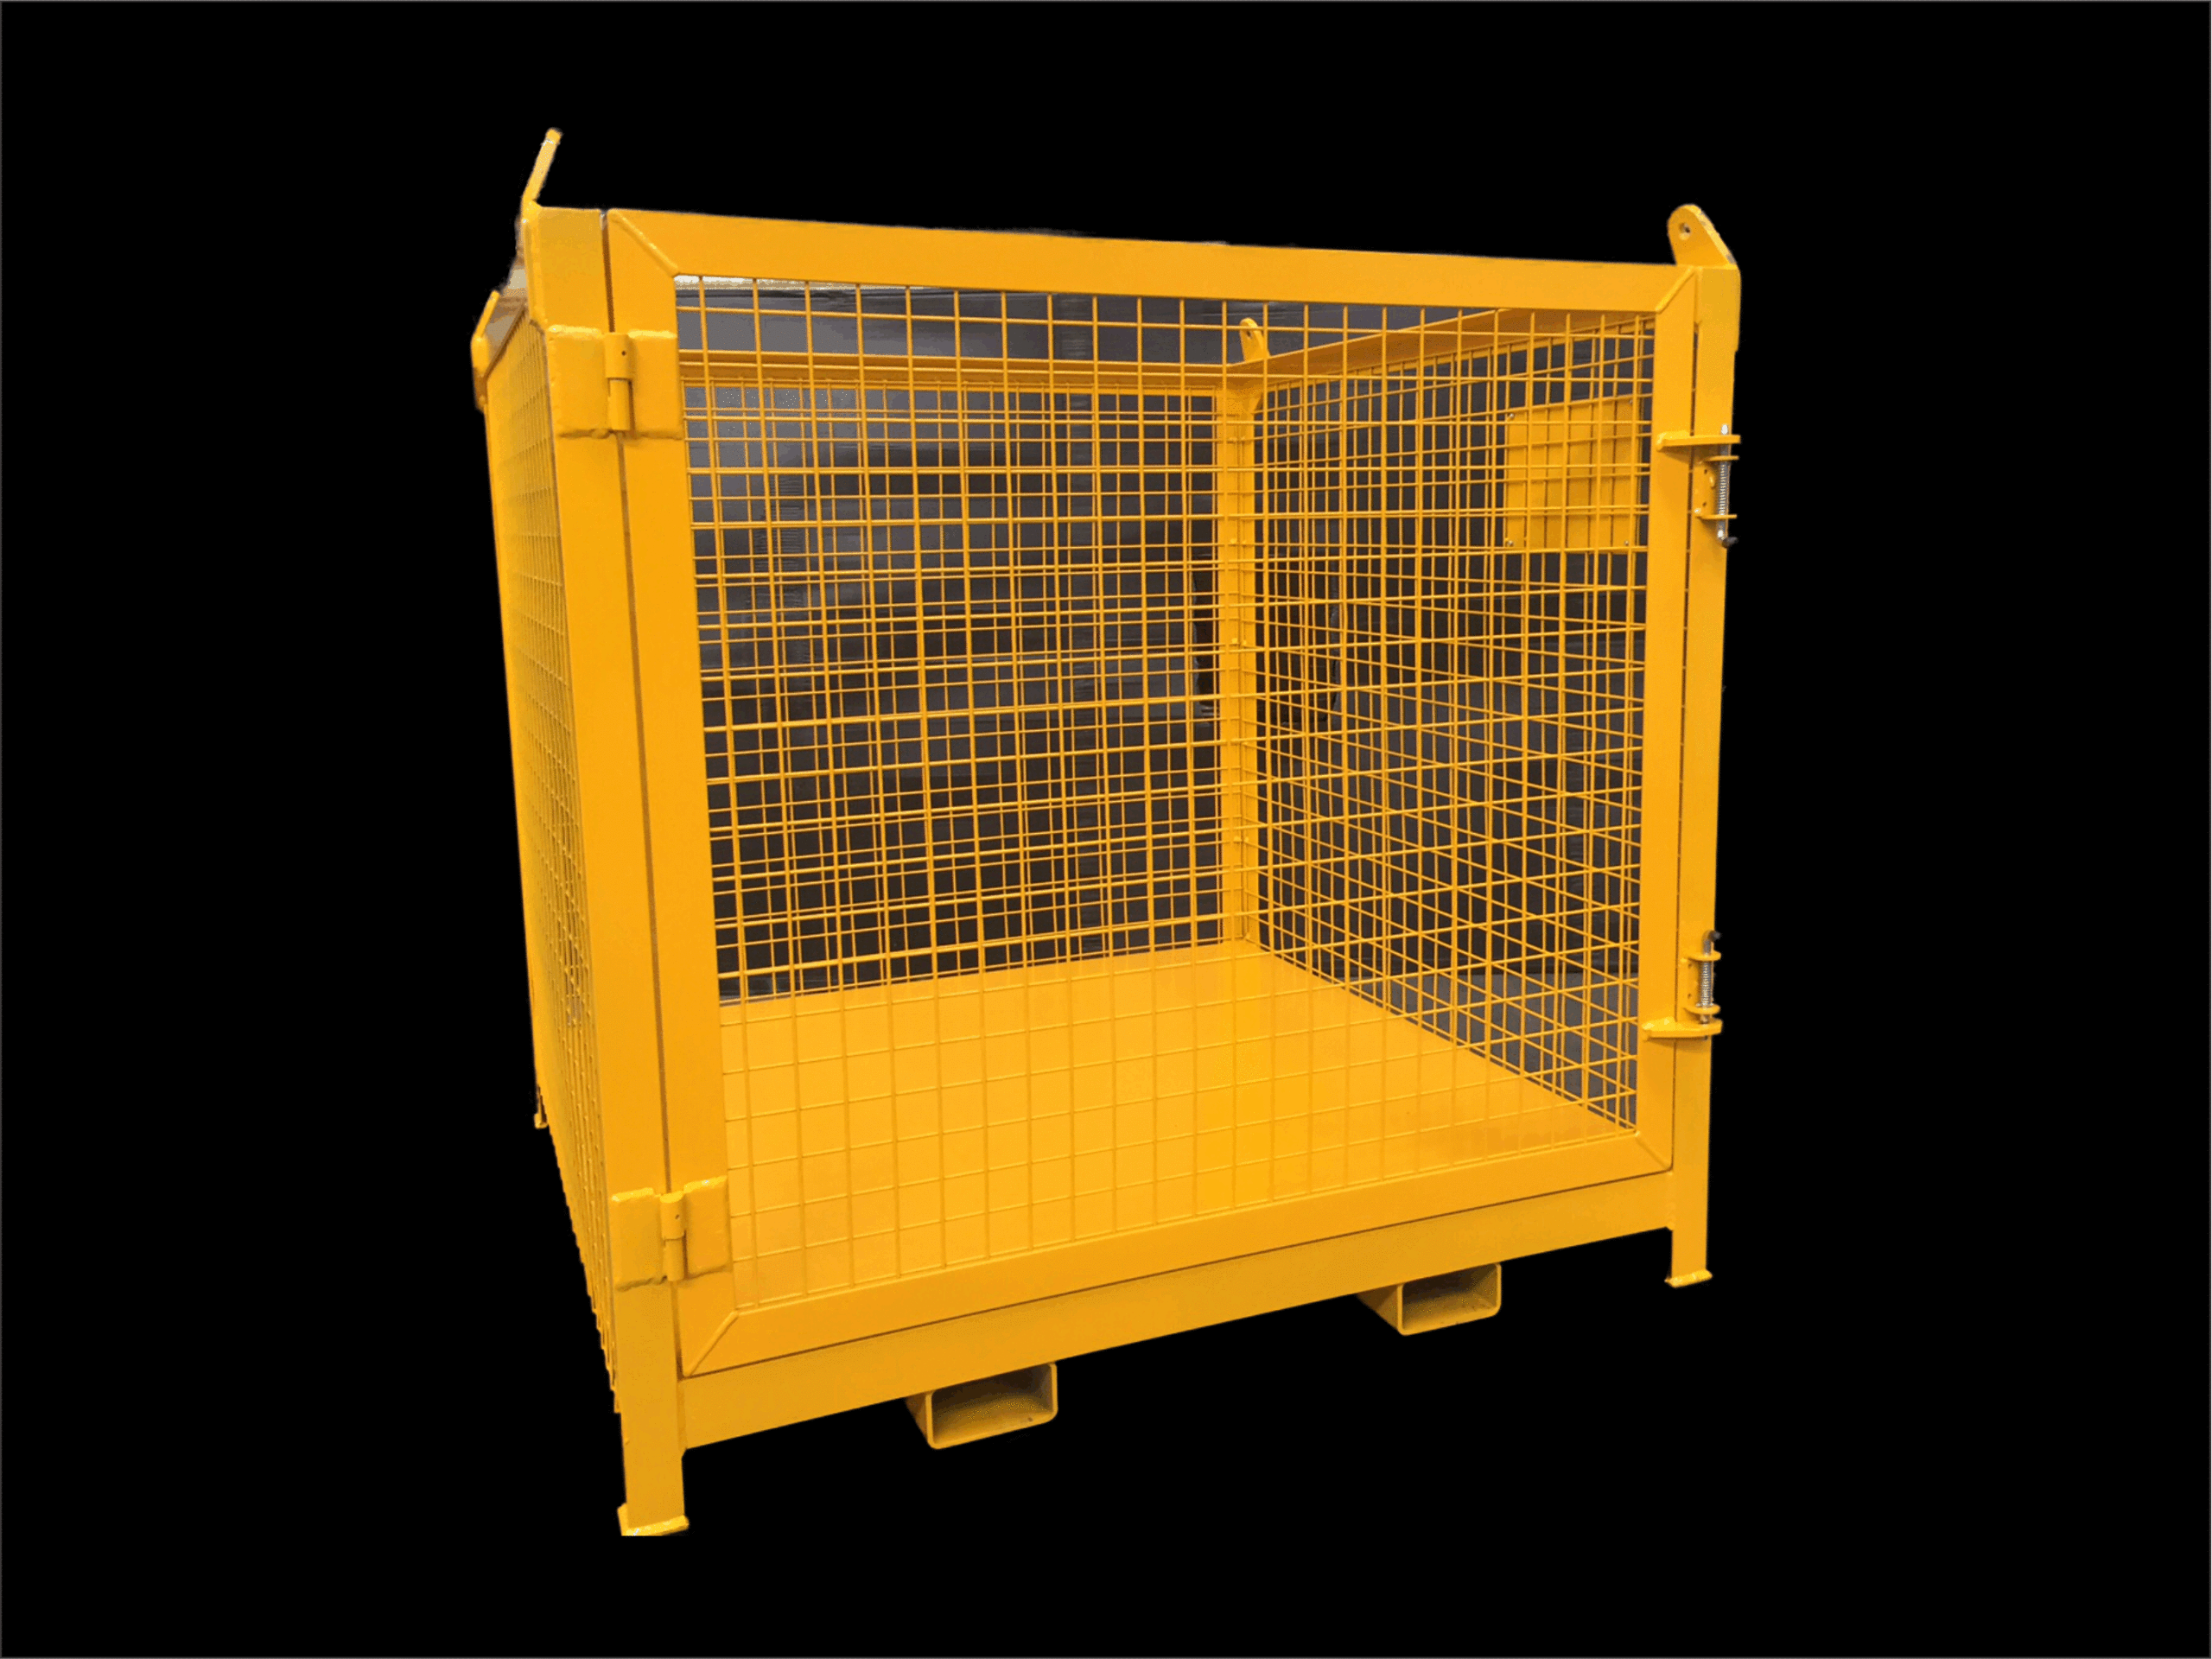 Goods Cage – 2 tonne – Gate